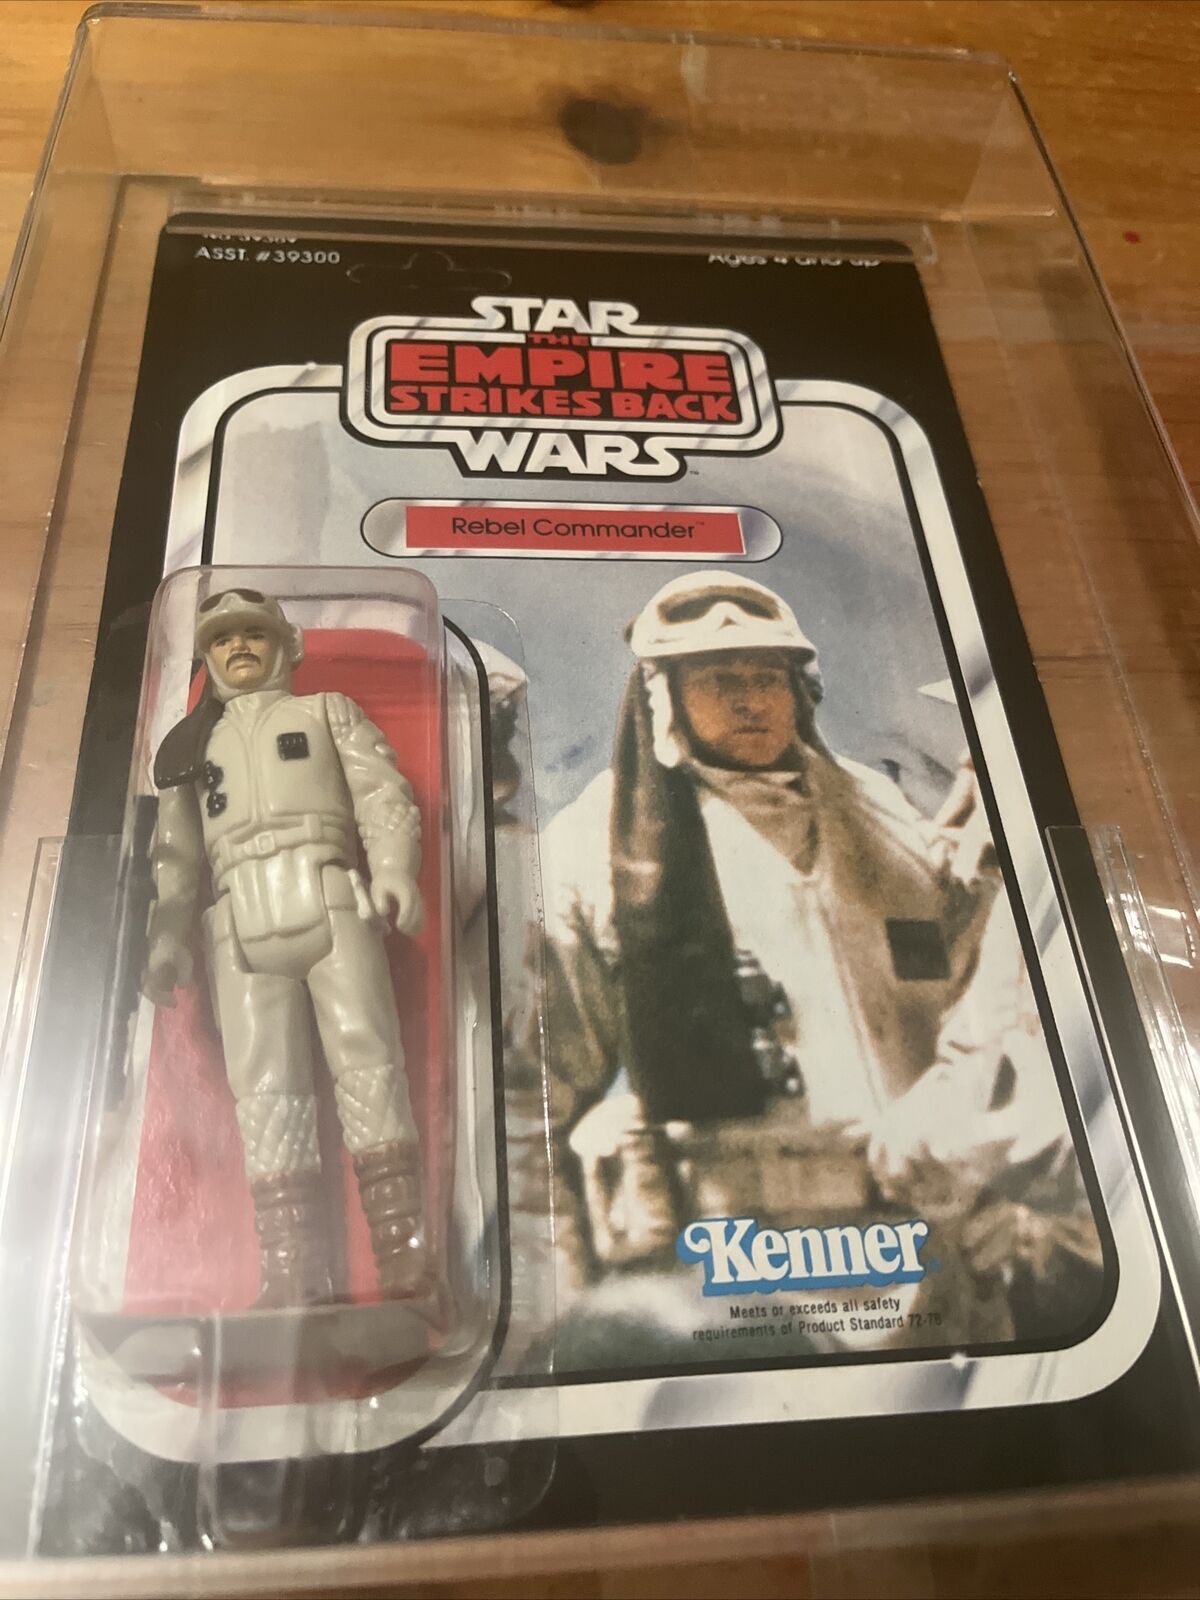 Rebel Commander sold